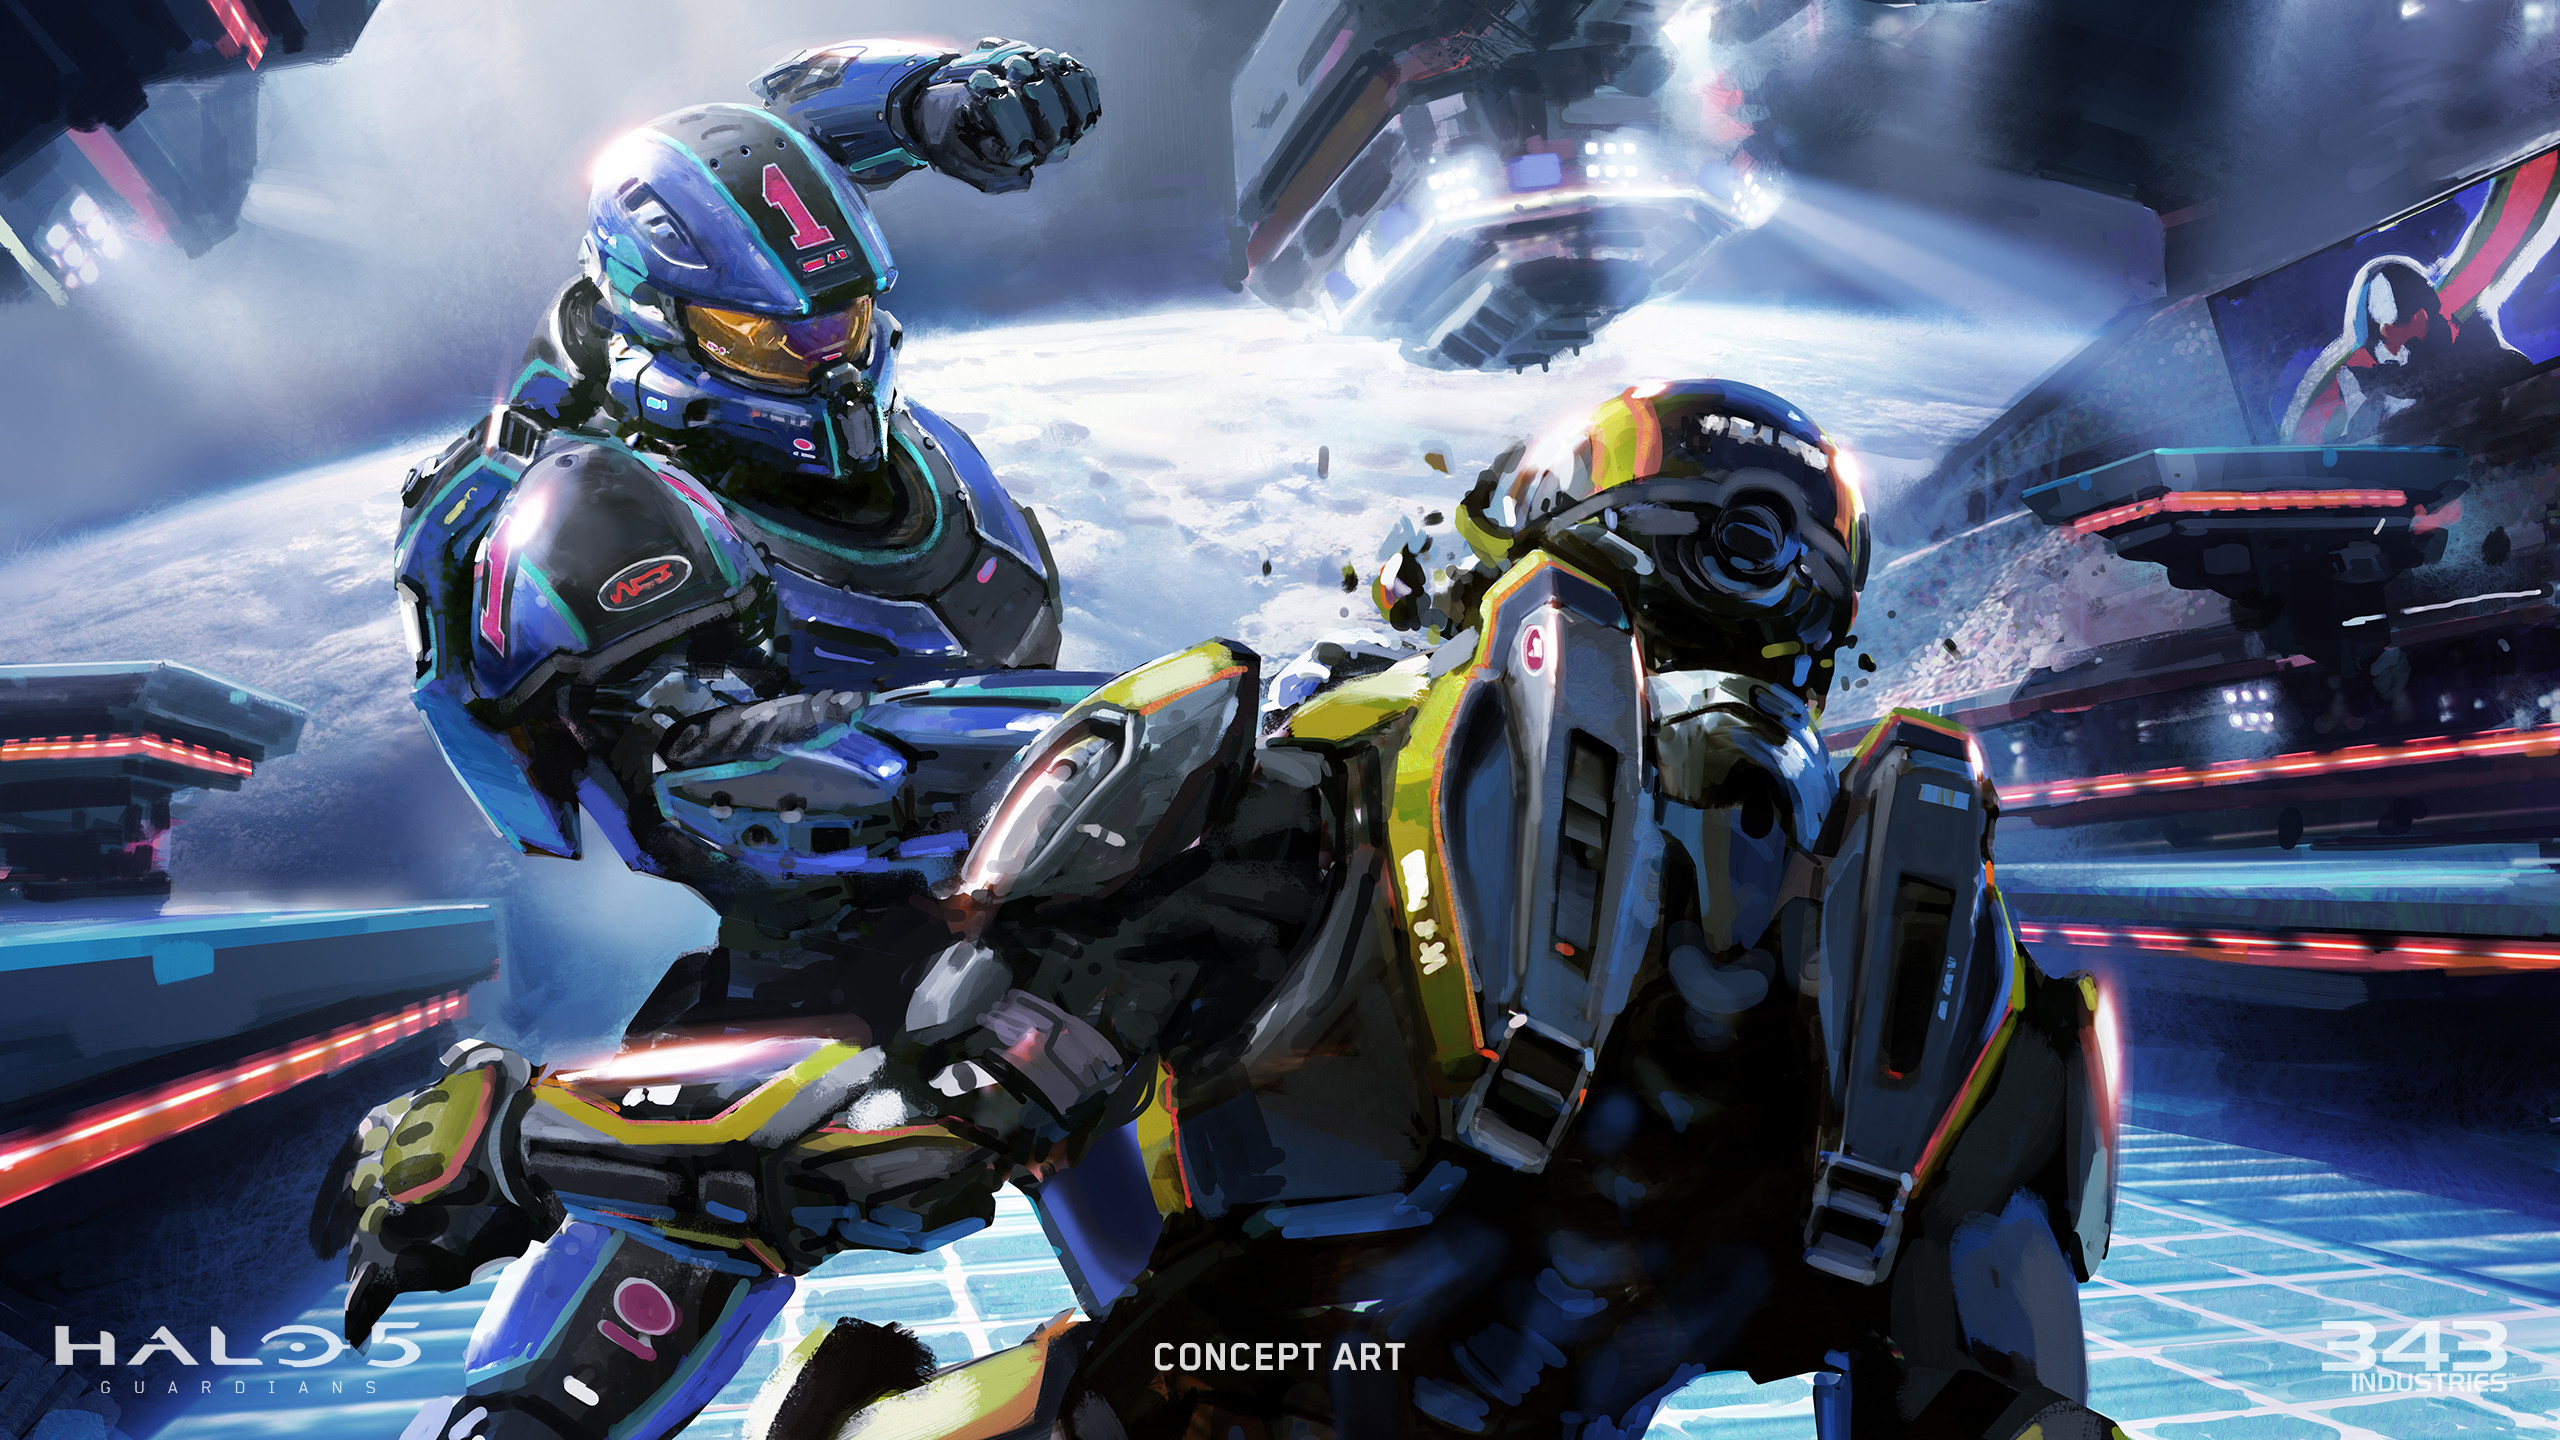 2560x1440 Halo 5: Guardians HD Wallpaper | Hintergrund |  | ID:564472 -  Wallpaper Abyss